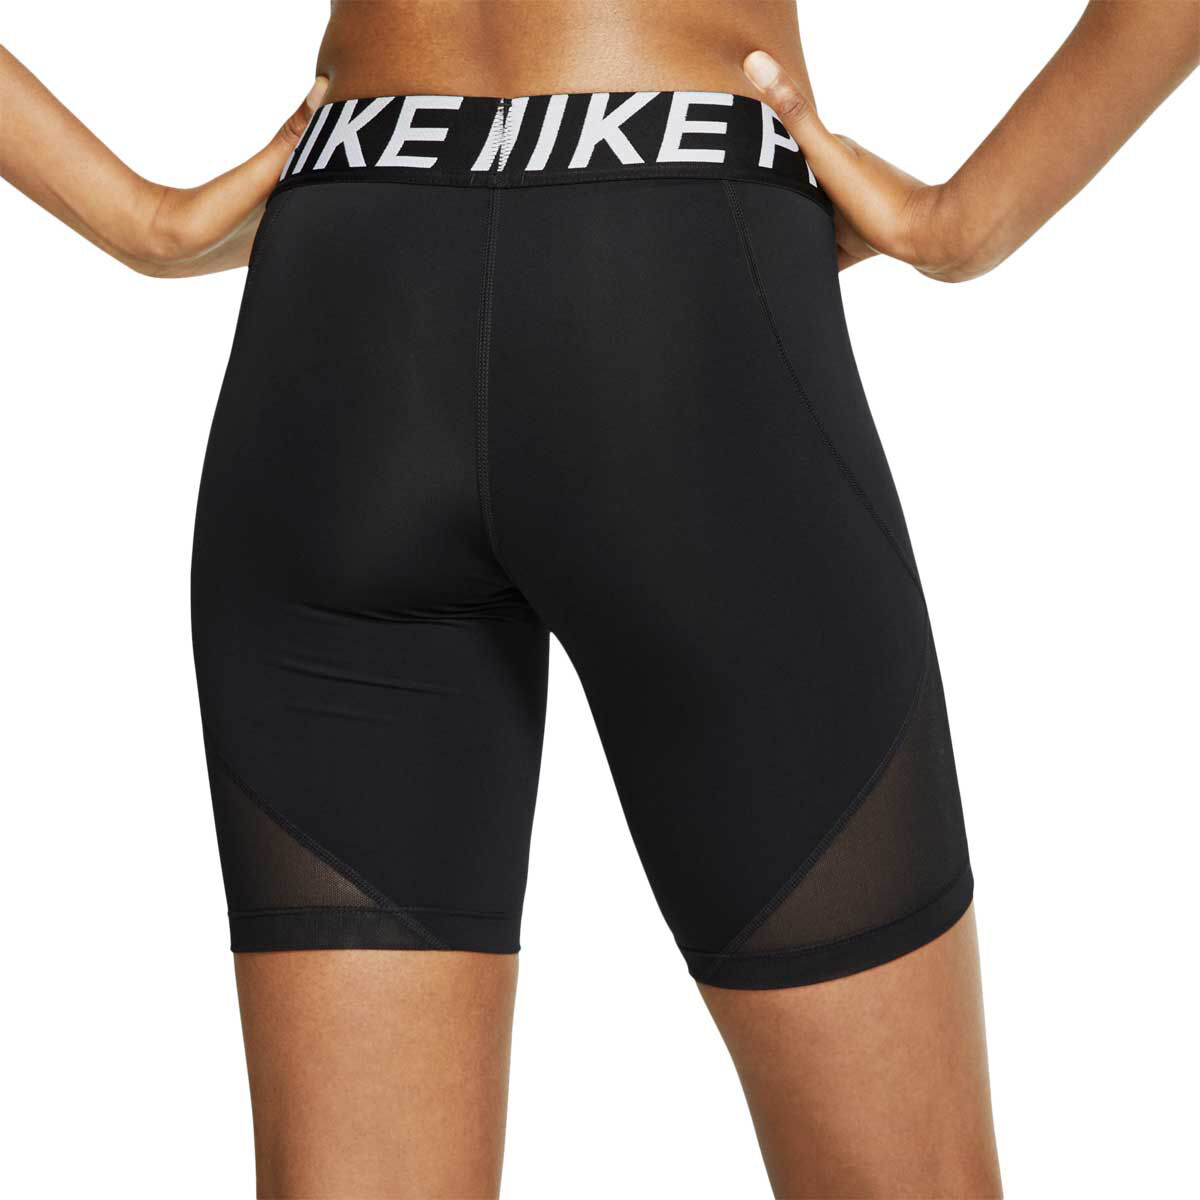 nike pro bike shorts womens